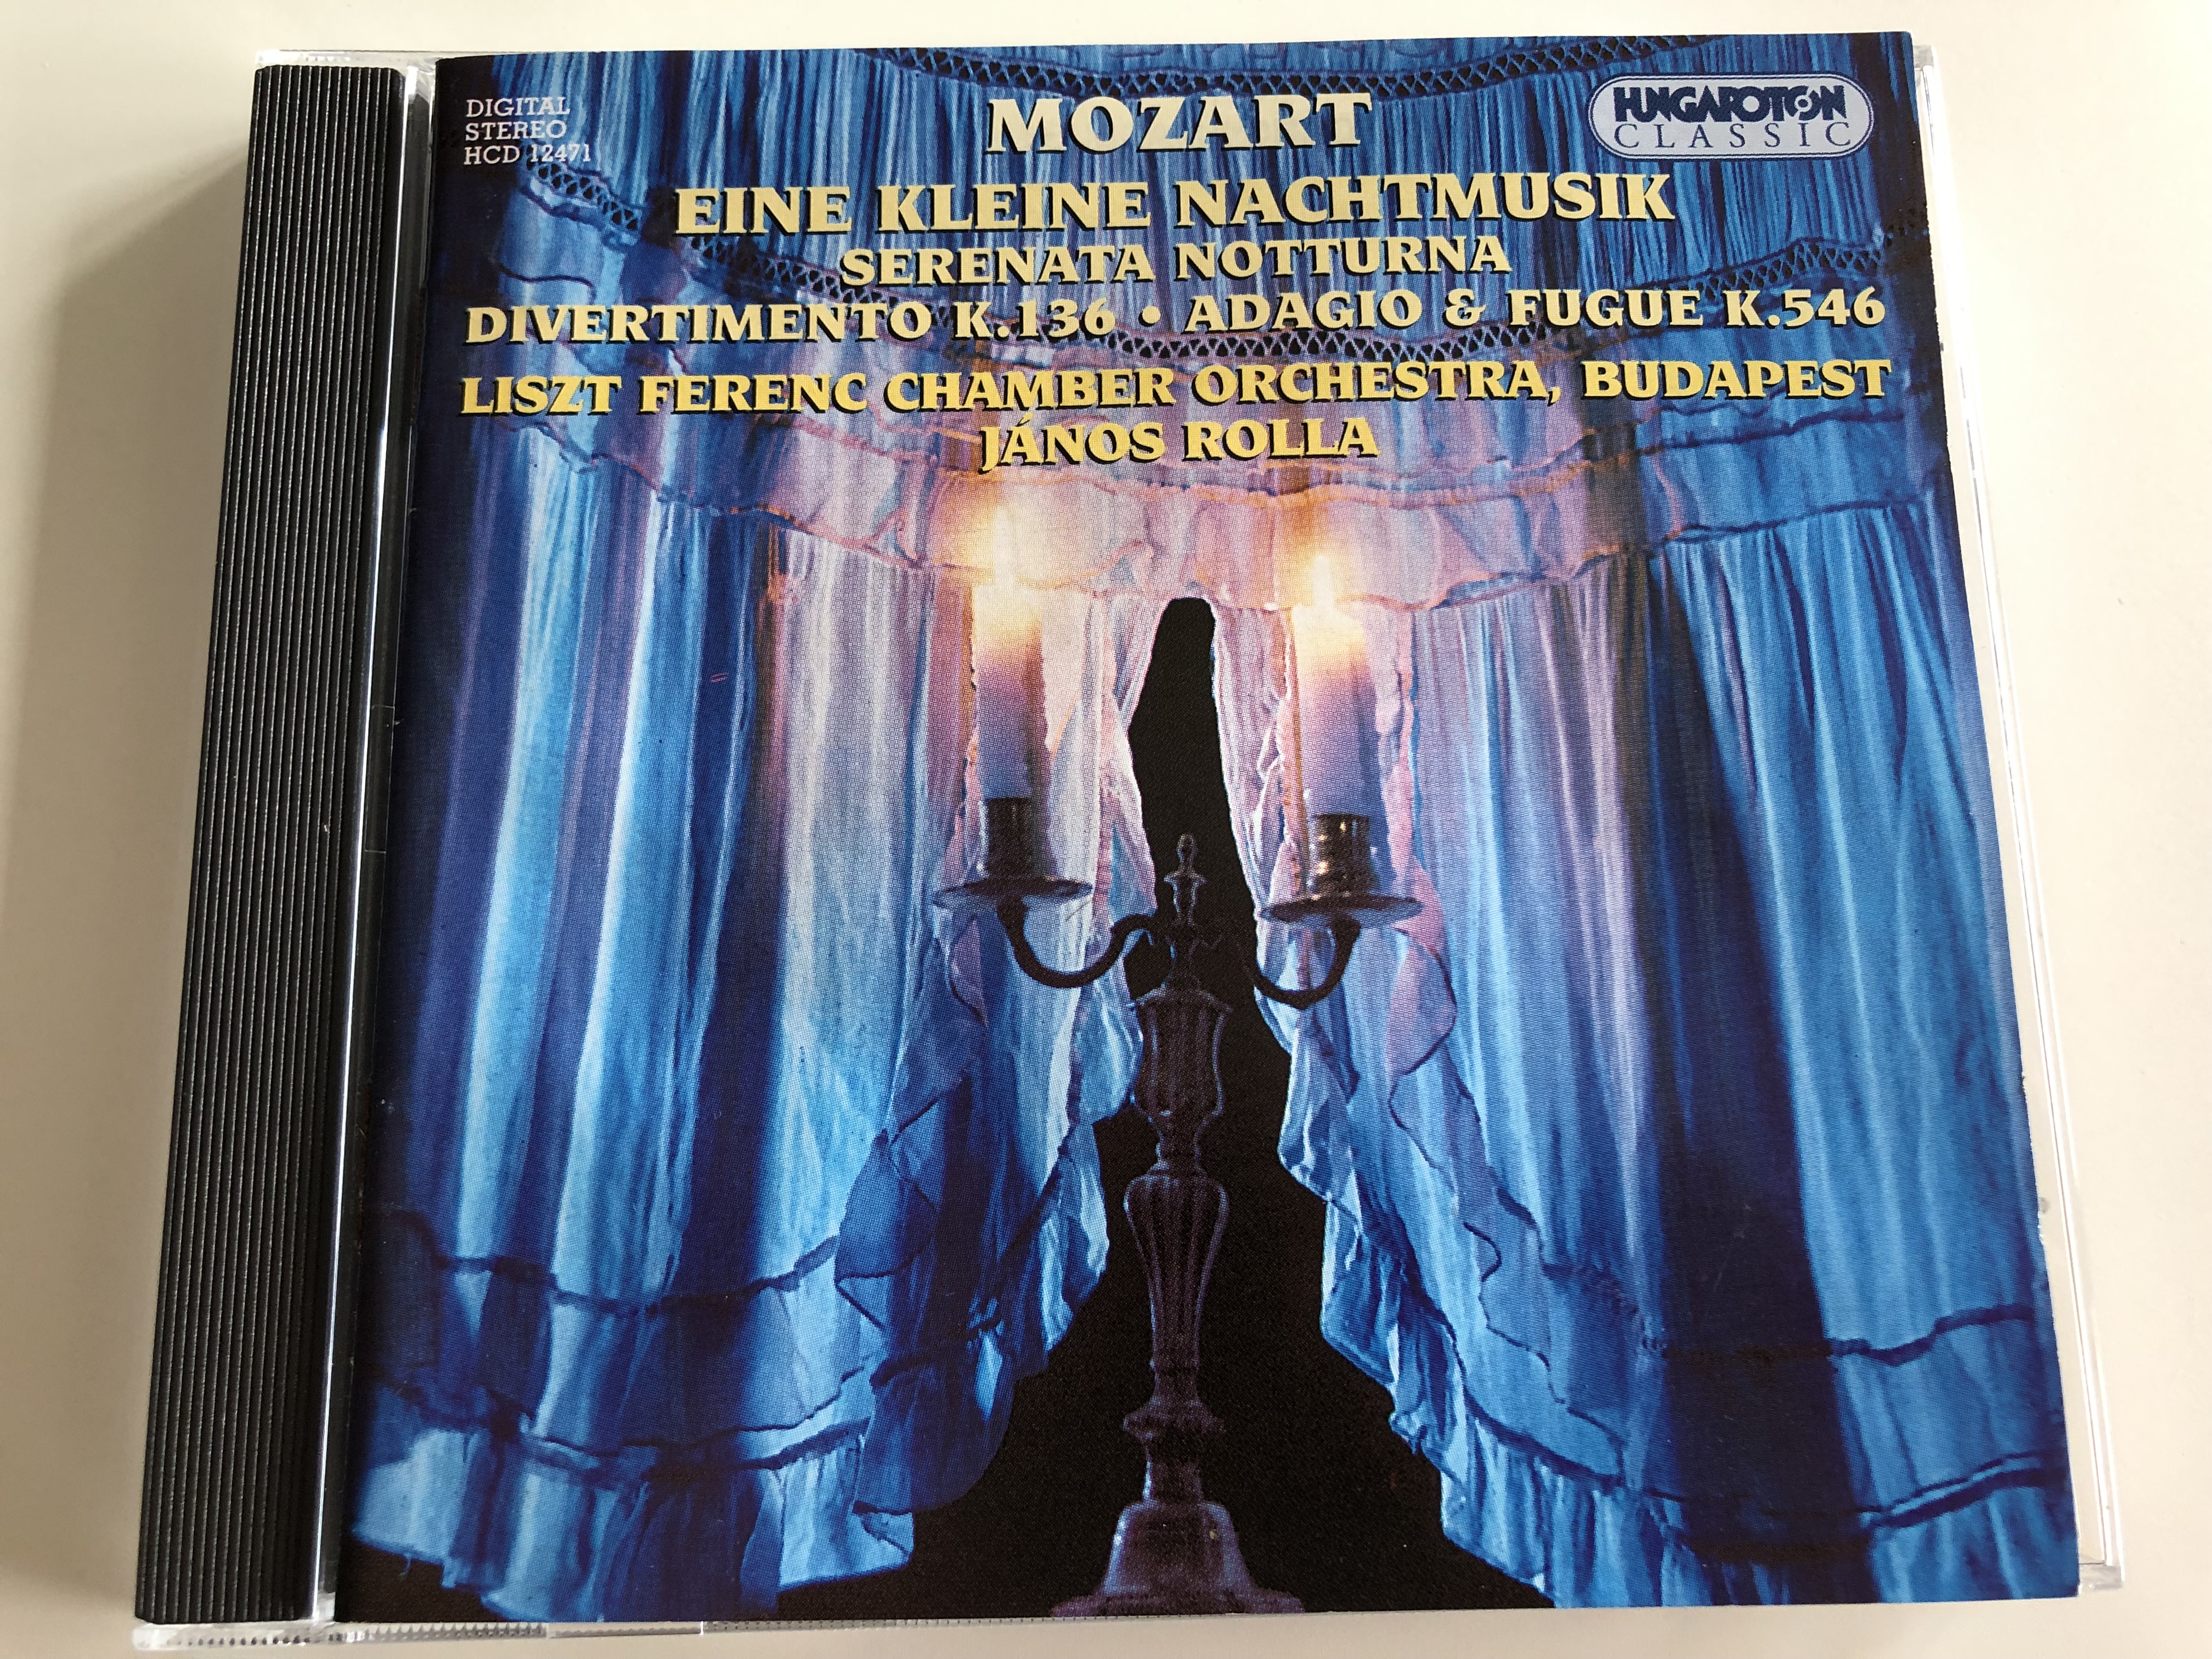 mozart-eine-kleine-nachtmusik-serenat-notturna-divertimento-k-136-adagio-fugue-k-546-liszt-ferenc-chamber-orchestra-budapest-janor-rolla-hungaroton-classic-audio-cd-1994-stereo-hcd-124-1-.jpg